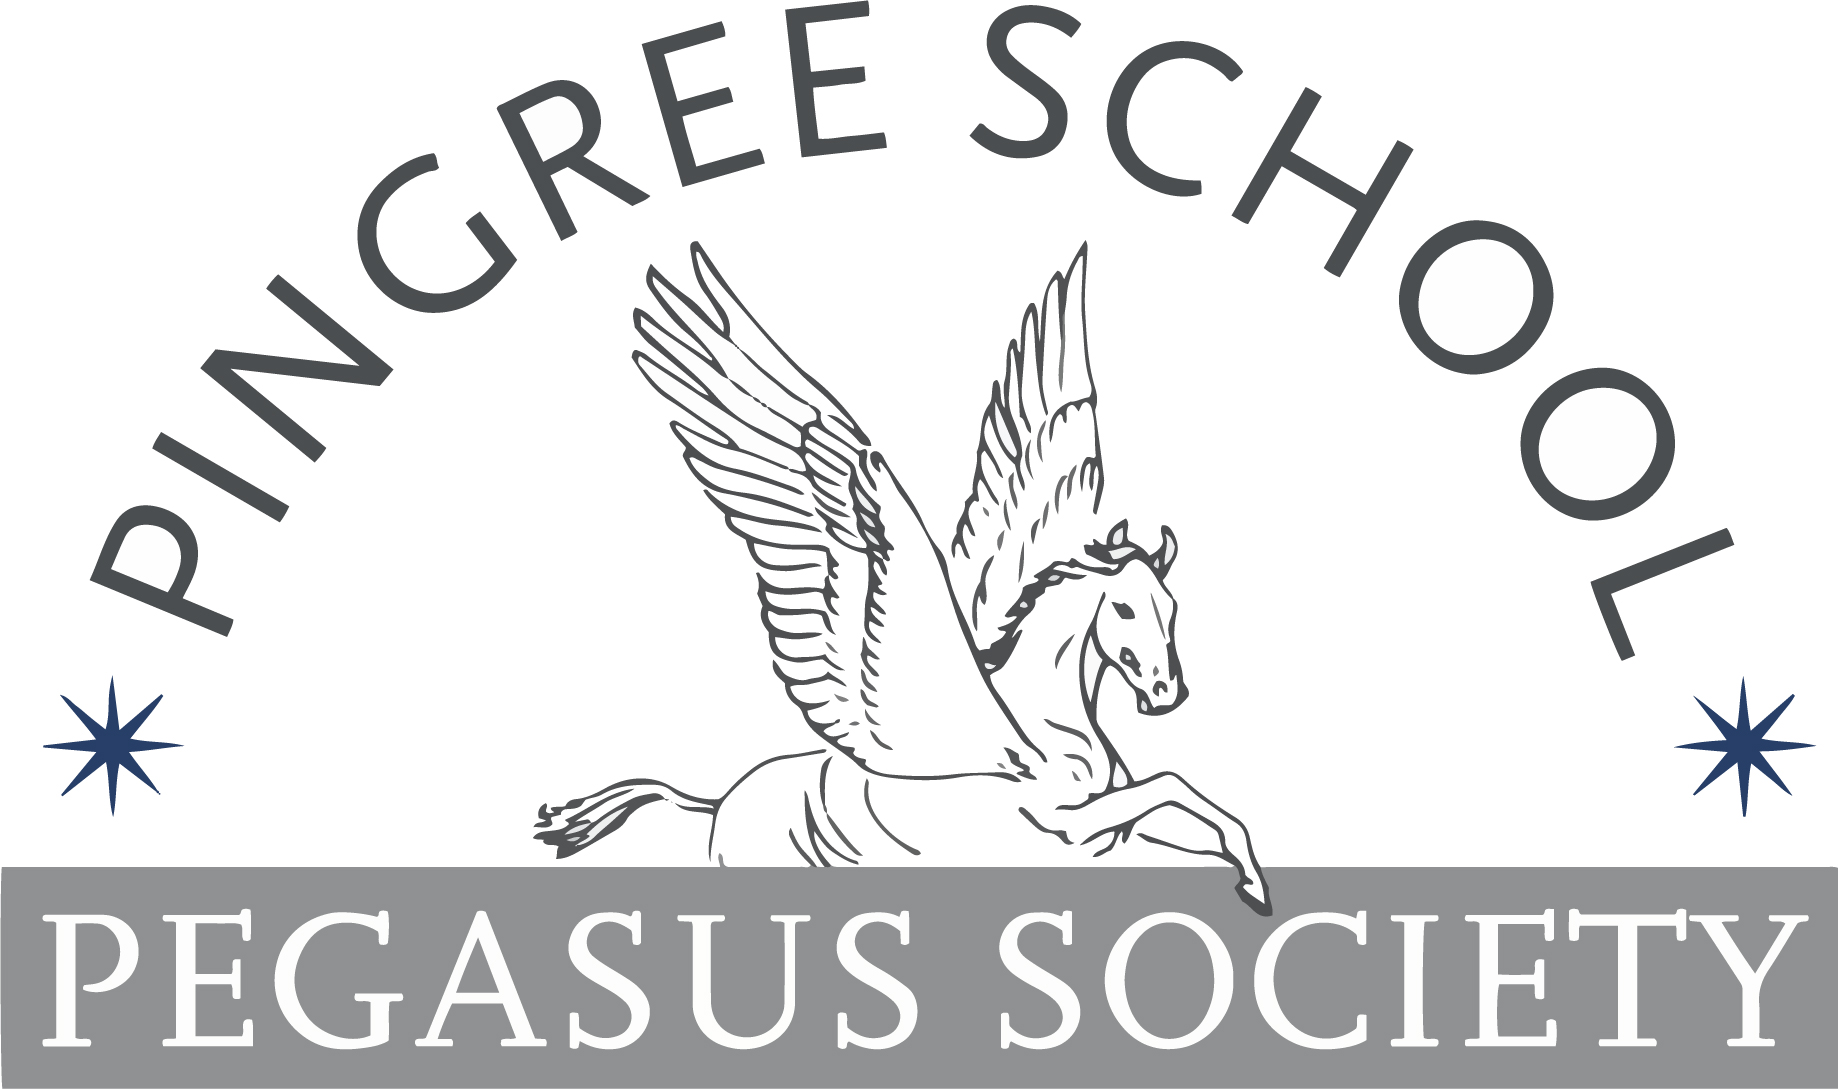 Image of the Pegasus Society logo